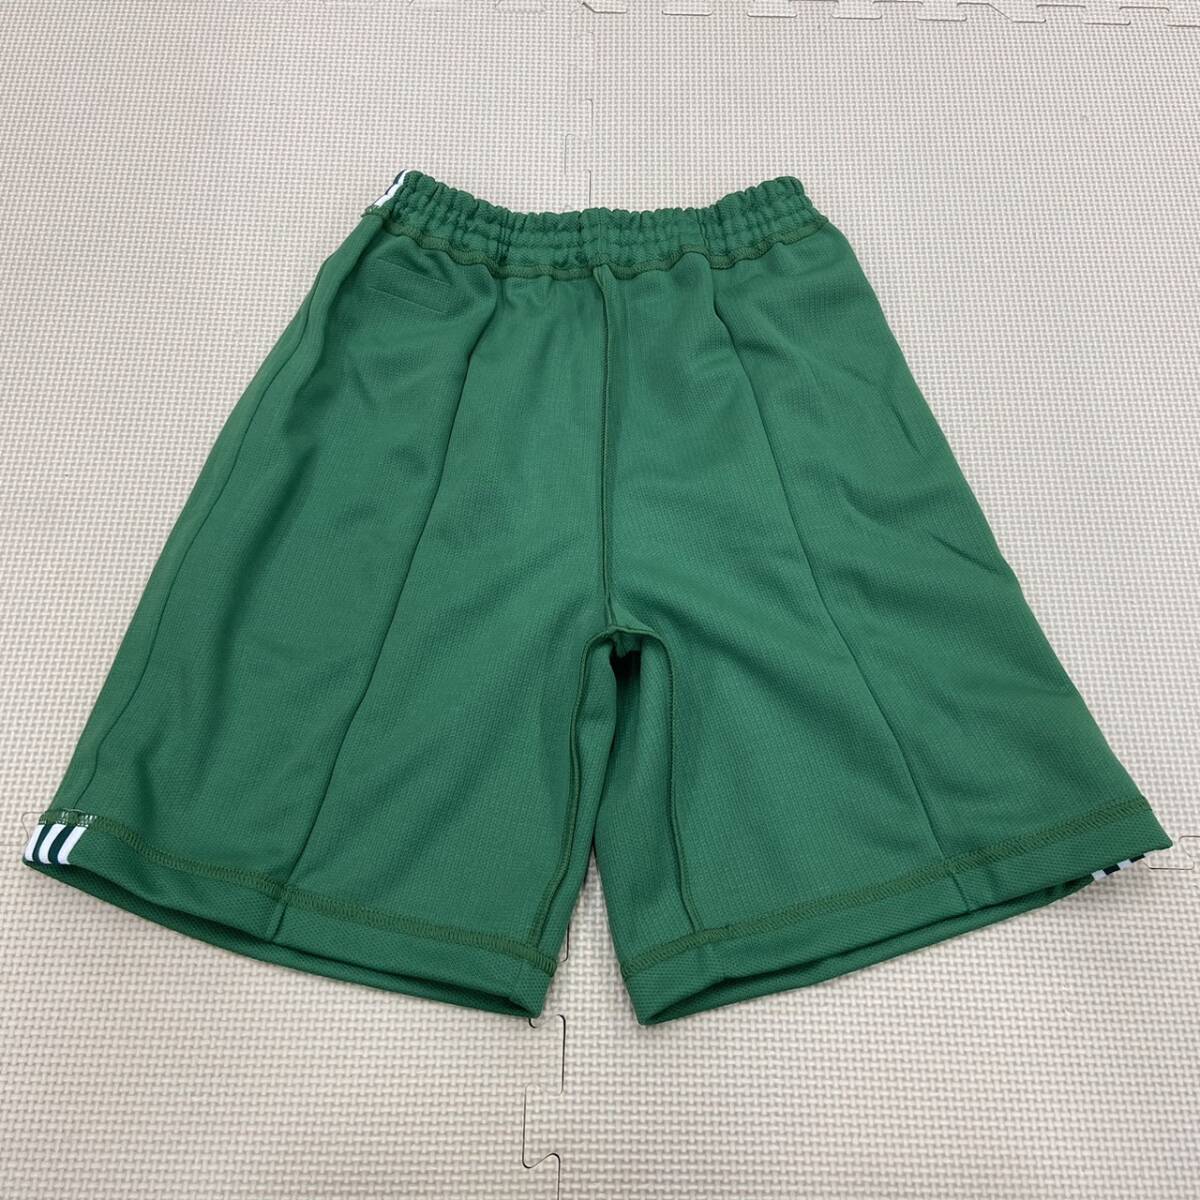 SS-GWLL новый товар [Sneed Sanwa] шорты размер LL W84 / зеленый / белый линия / джерси / короткий хлеб / спорт одежда / спортивная форма / спортивная форма / довольно большой 